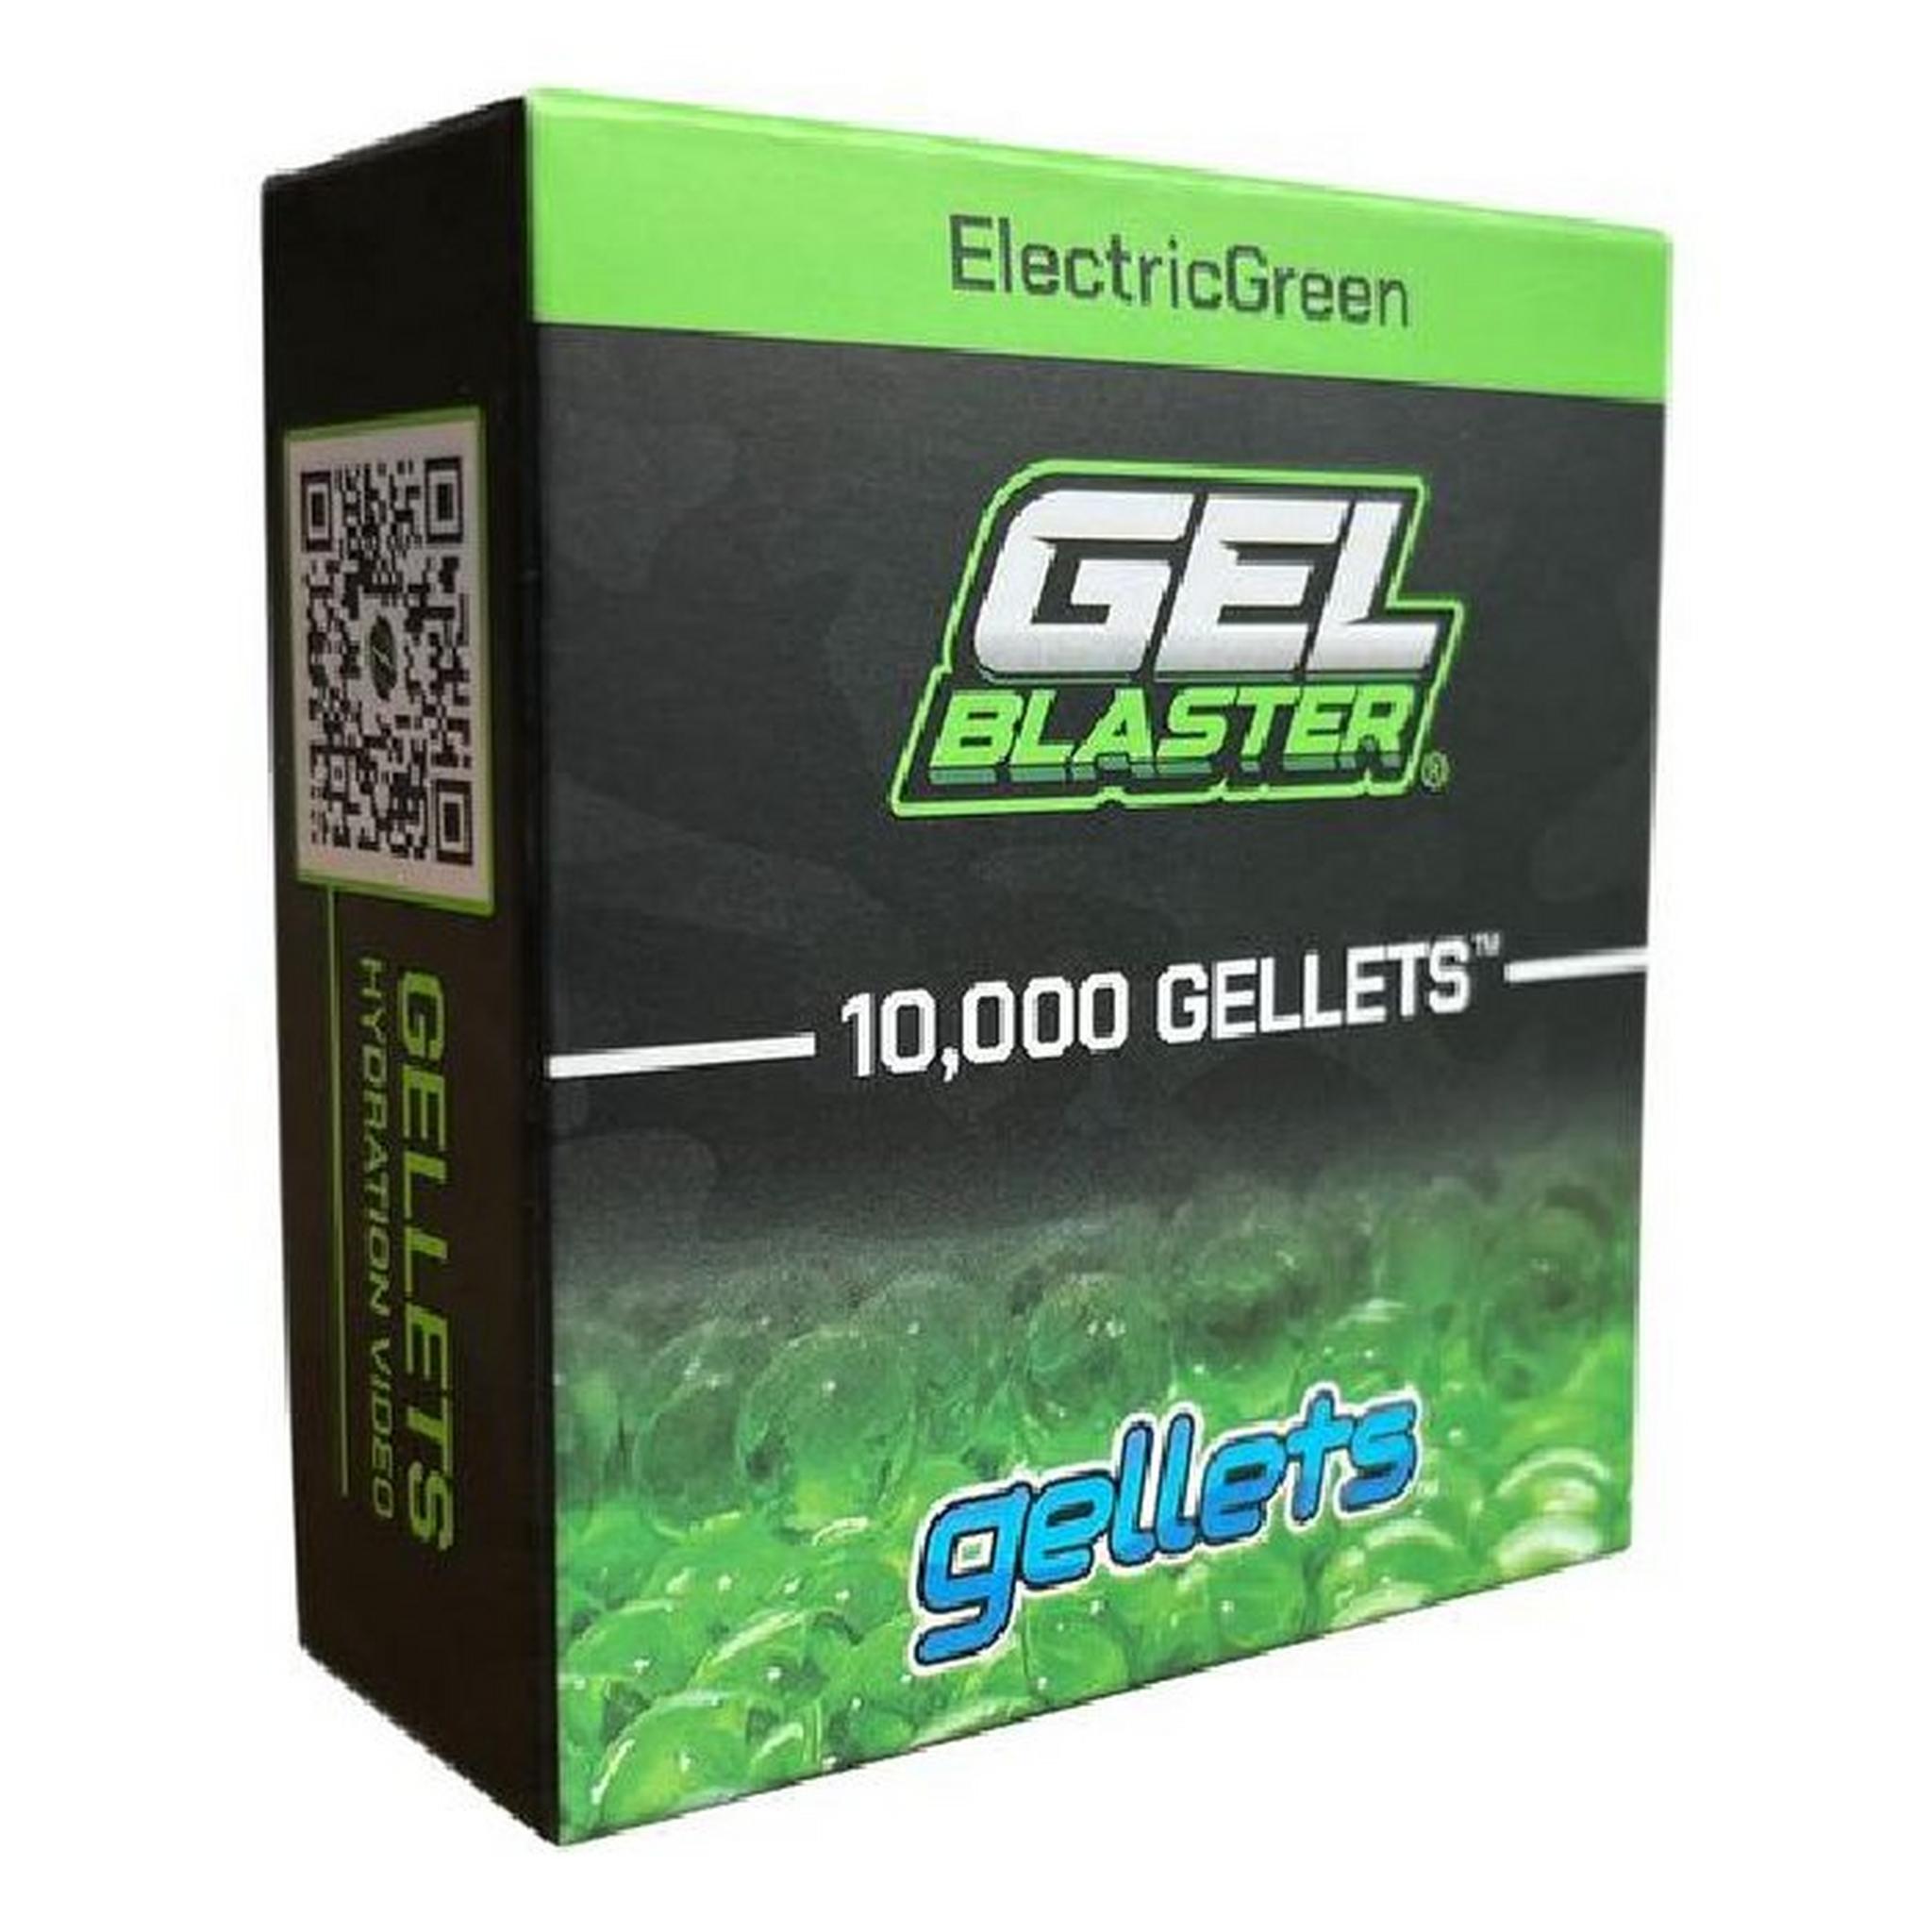 GEL Blaster 10,000 Pellets Gellets Blaster, GBGL1009-5L – Green